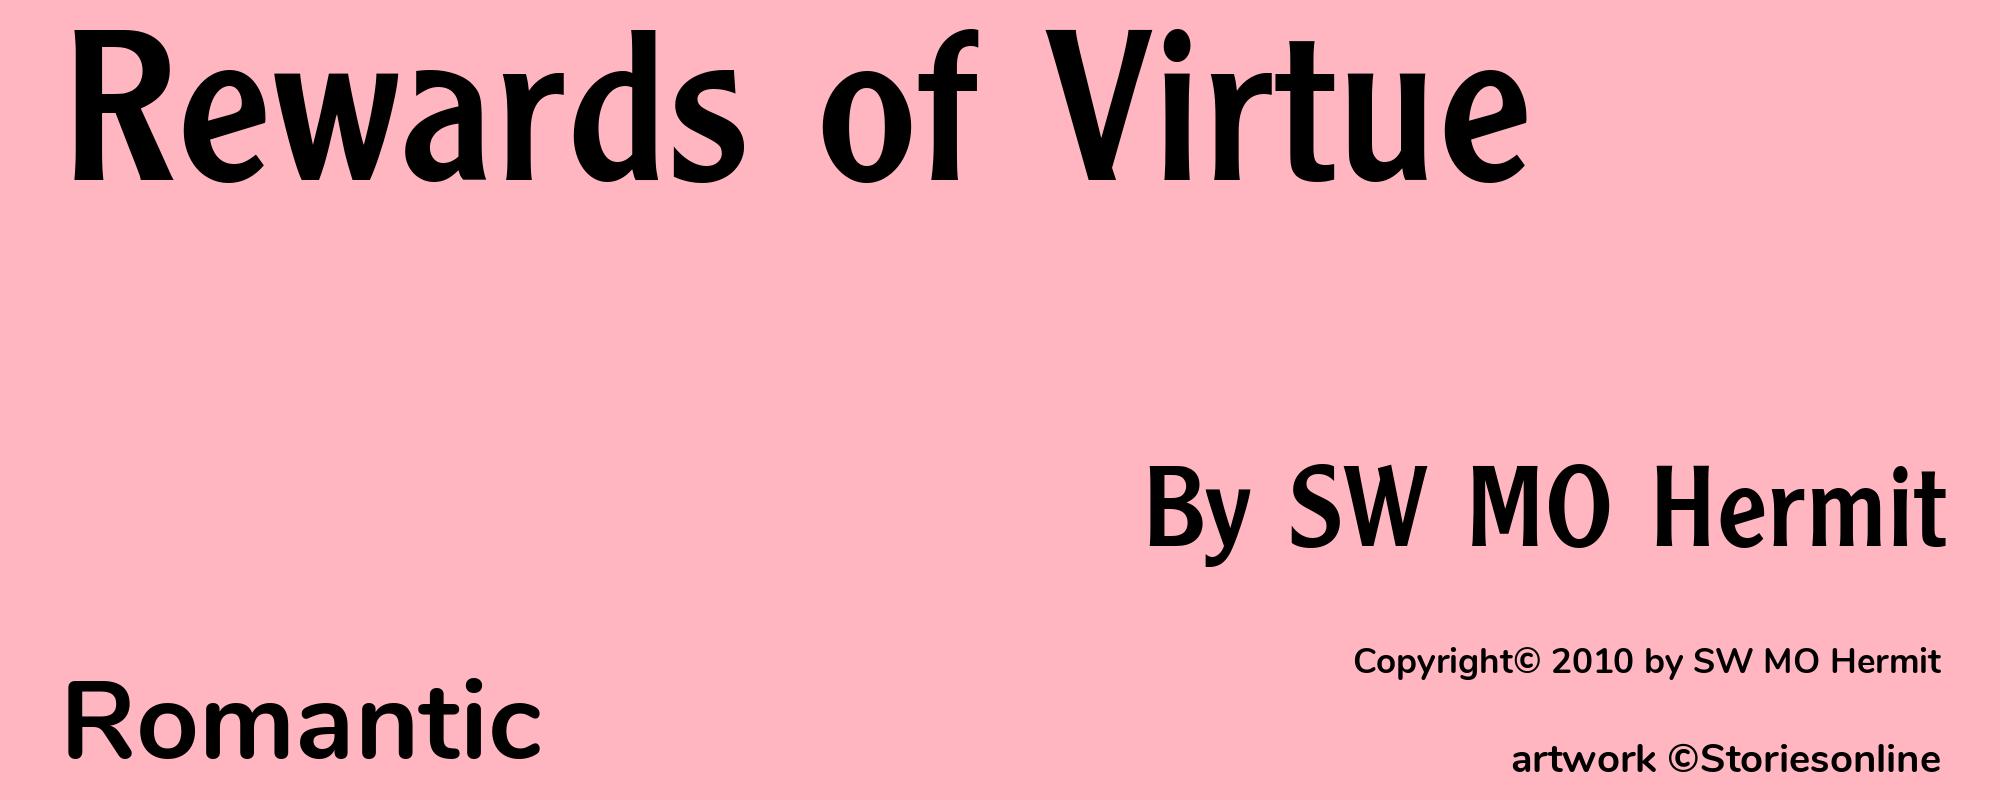 Rewards of Virtue - Cover